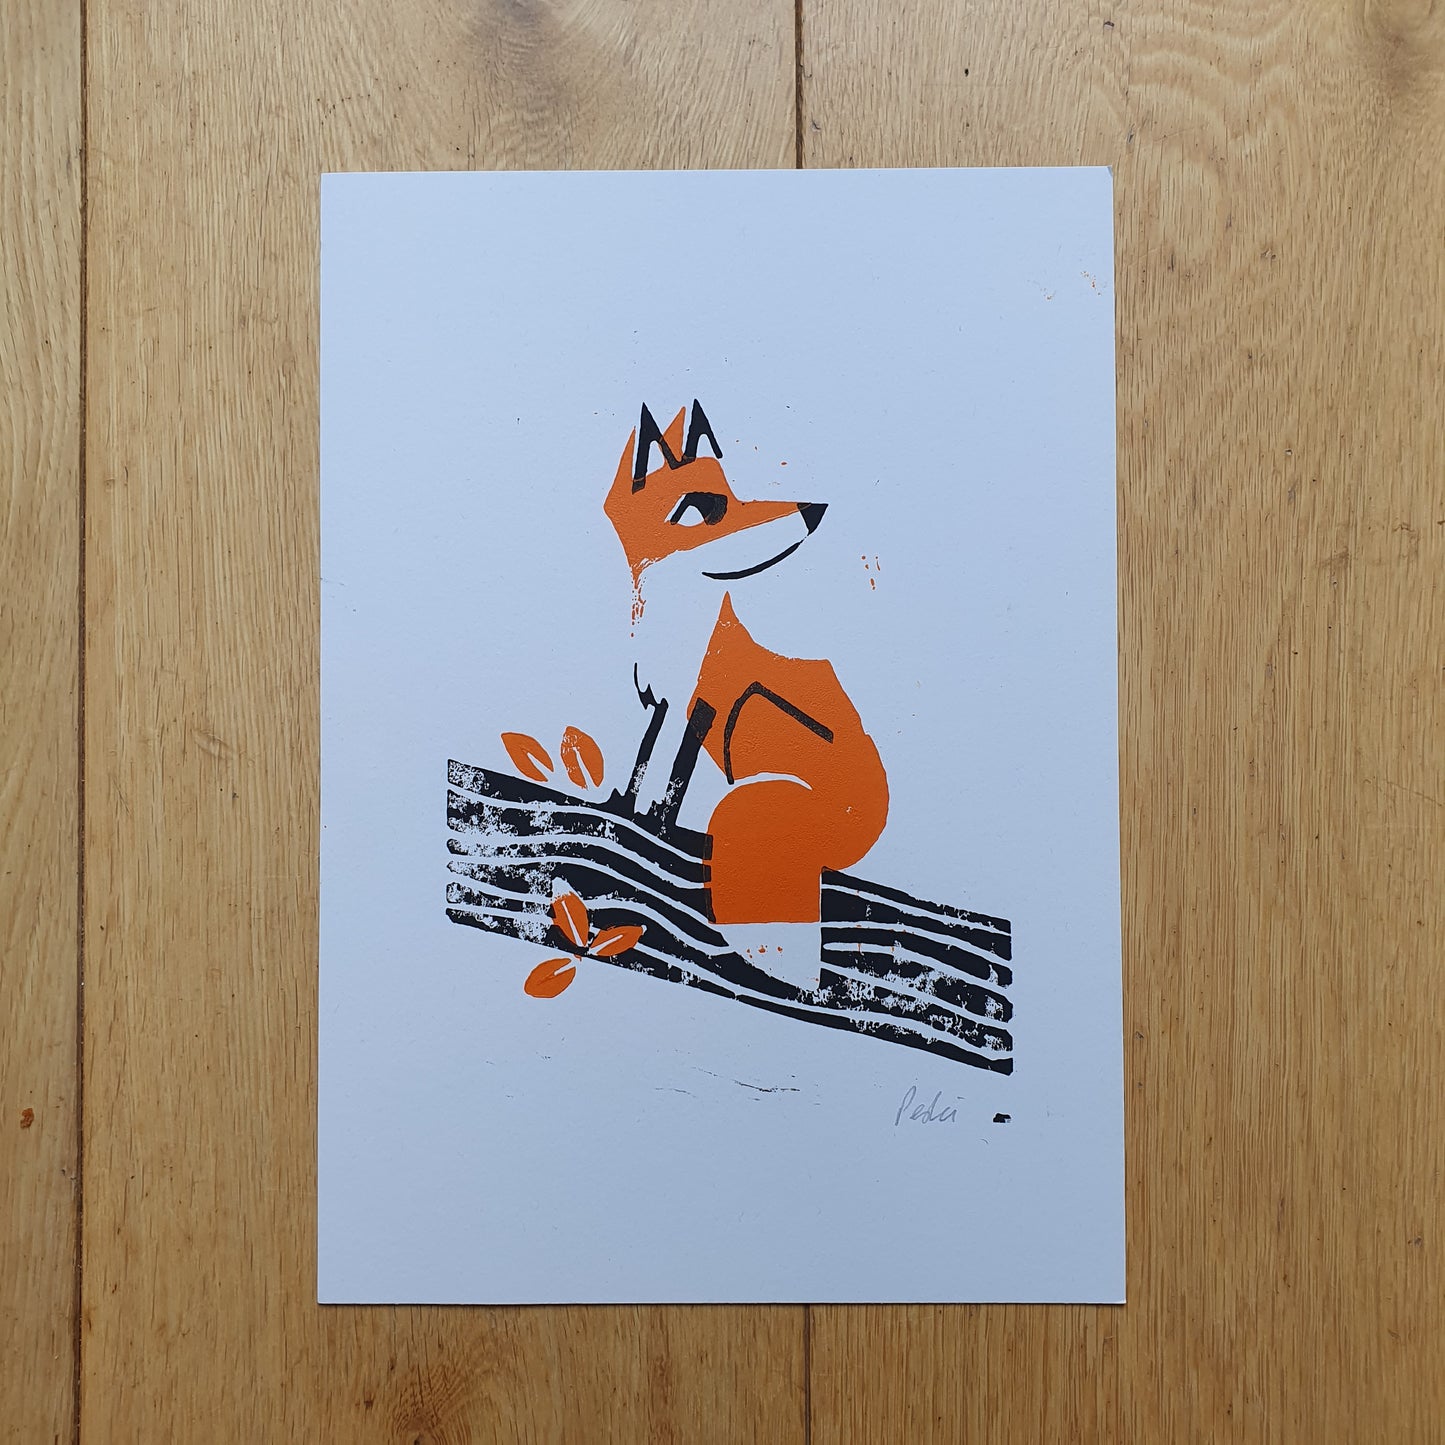 What's up Fox - A4 lino print by Peski Studio